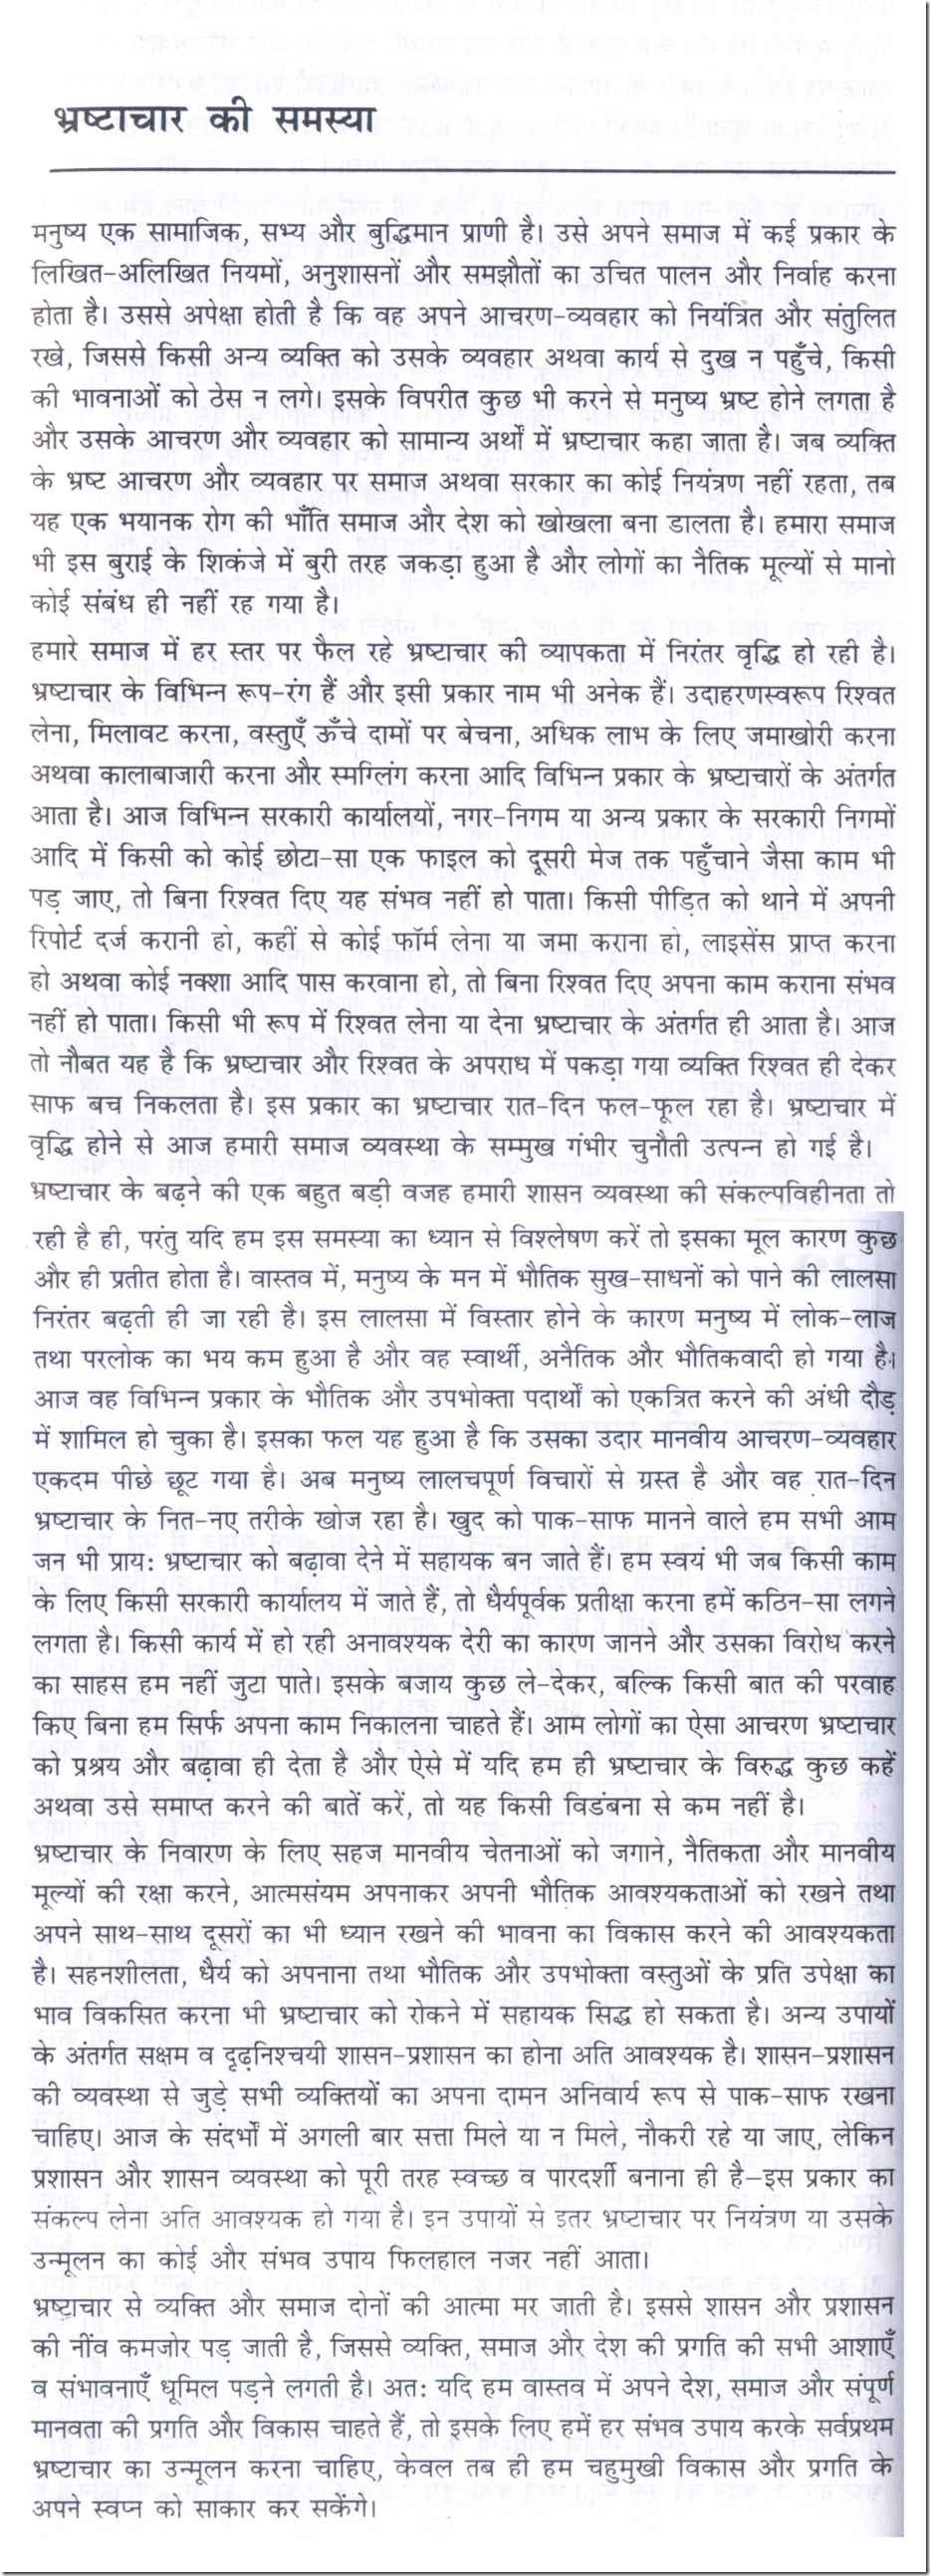 Bhrashtachar ek samasya essay in marathi   